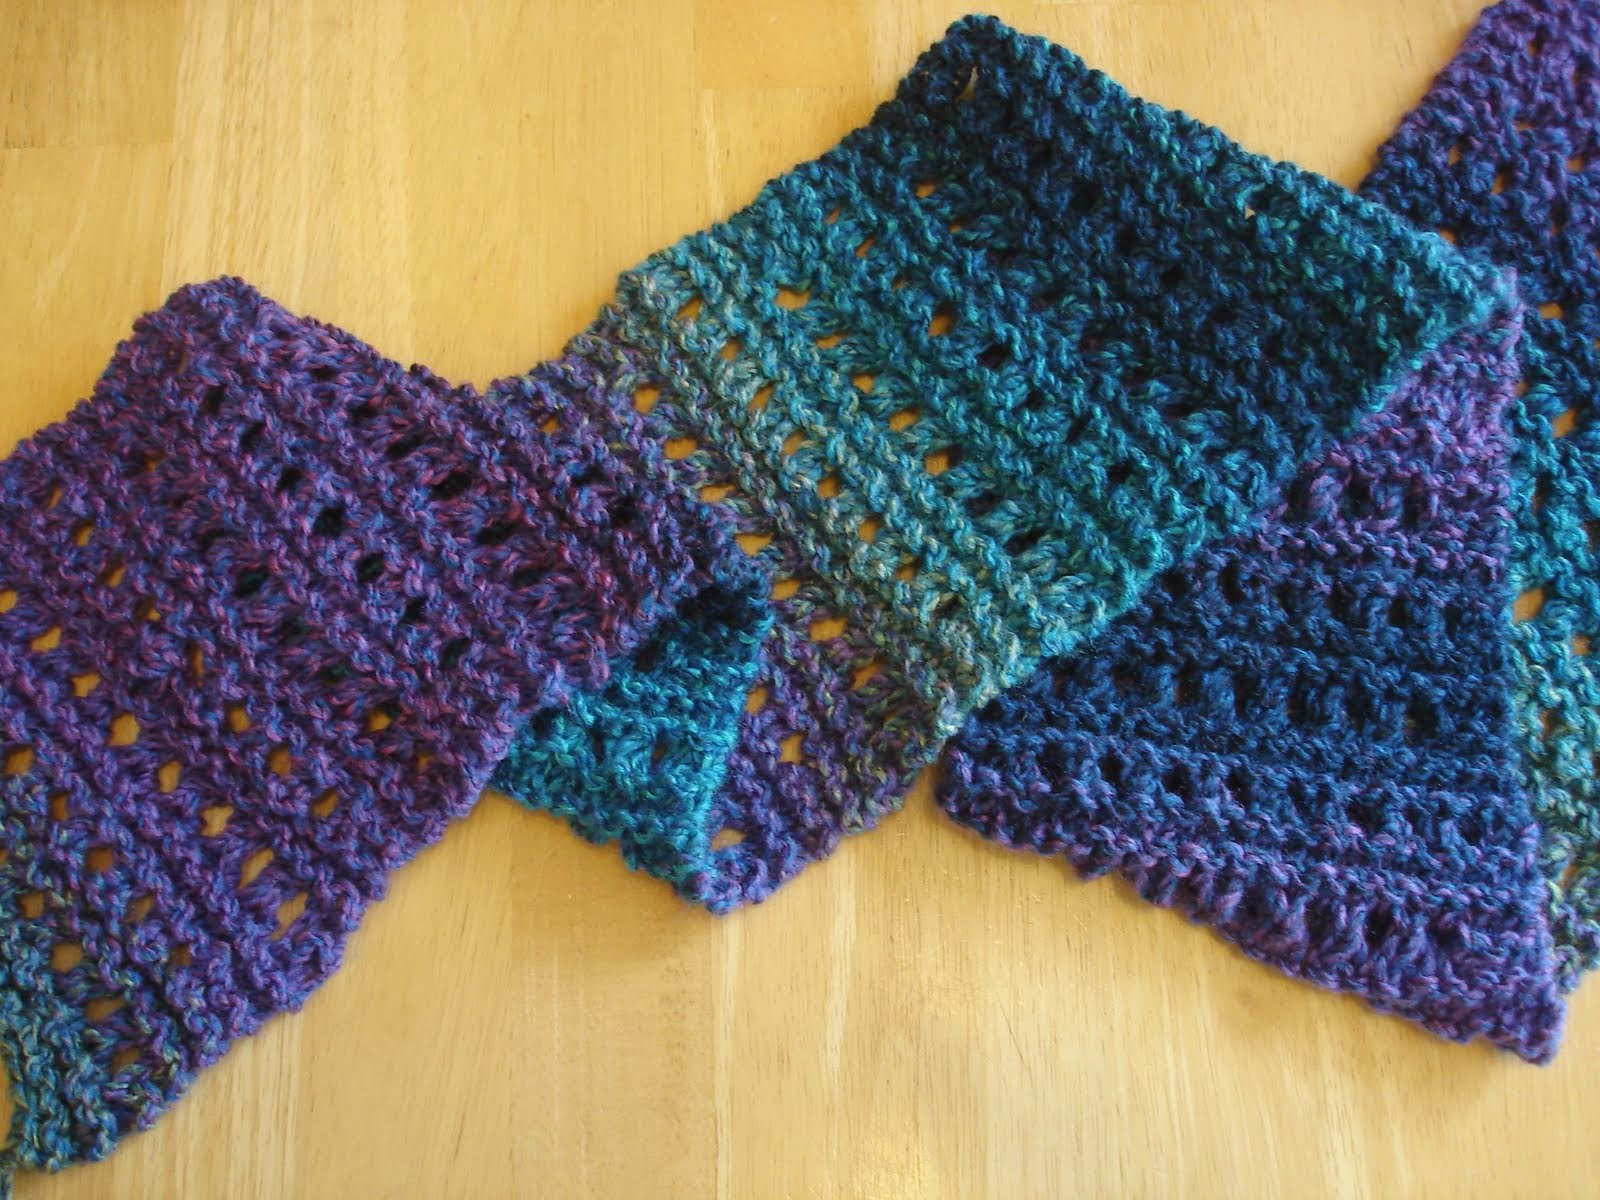 Knitted Scarf Patterns Pinterest Best Free Crochet Blanket Patterns For Beginners On Pinterest